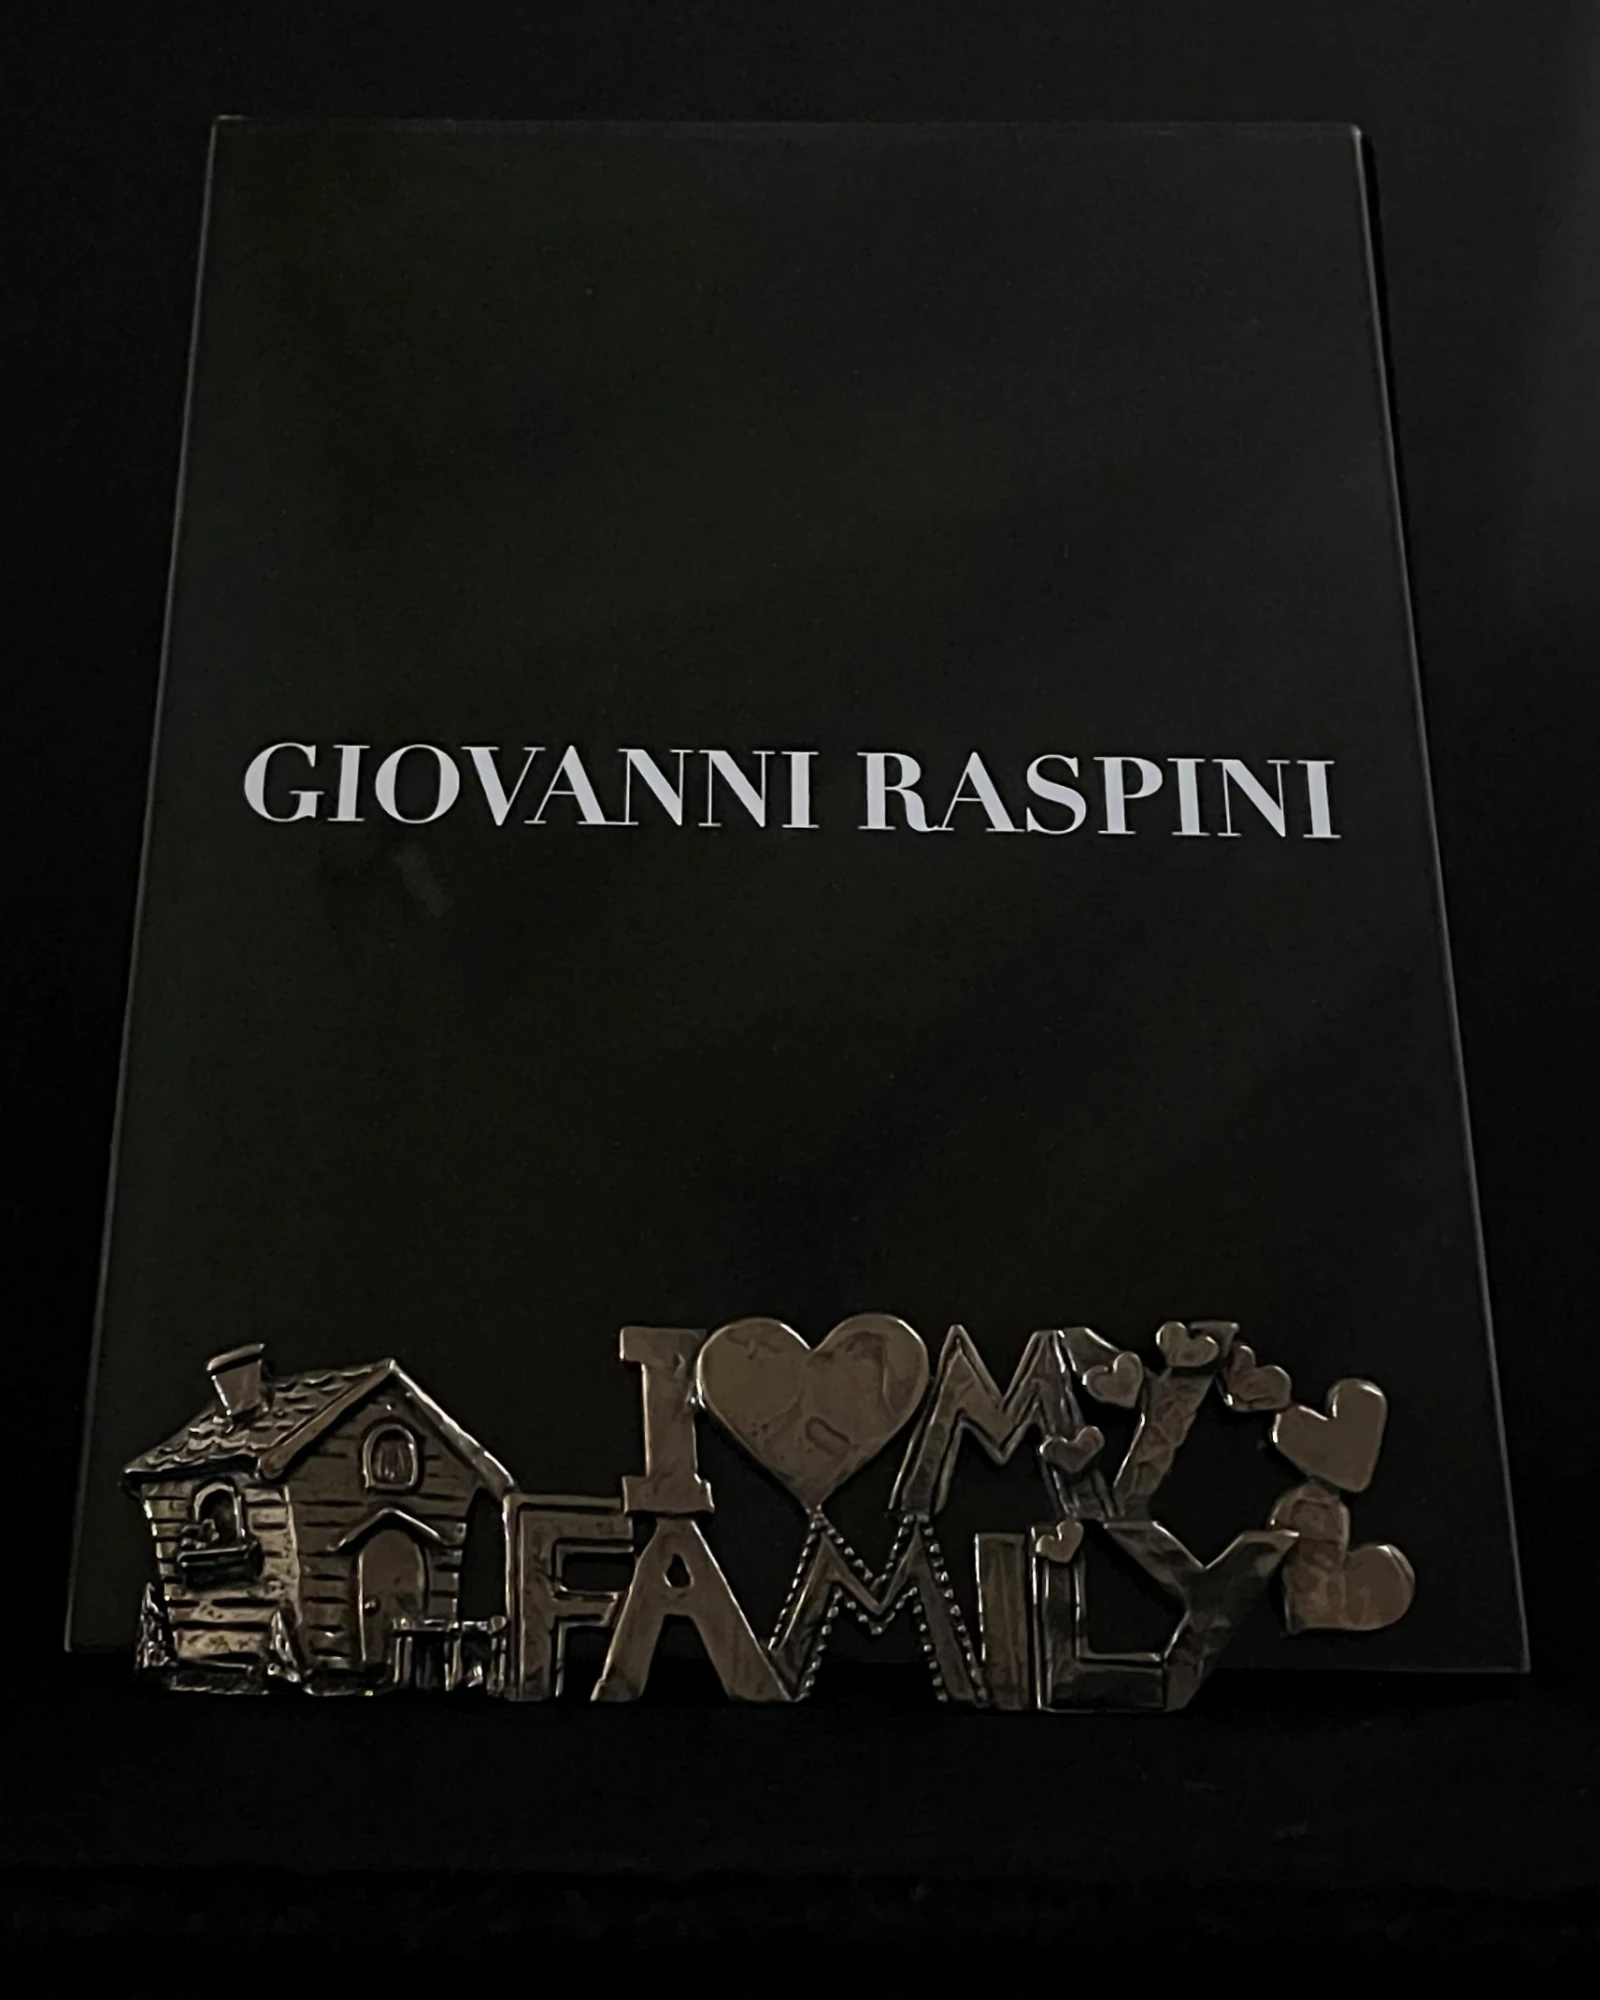 021_Giovanni Raspini cornice in bronzo cod: B0549